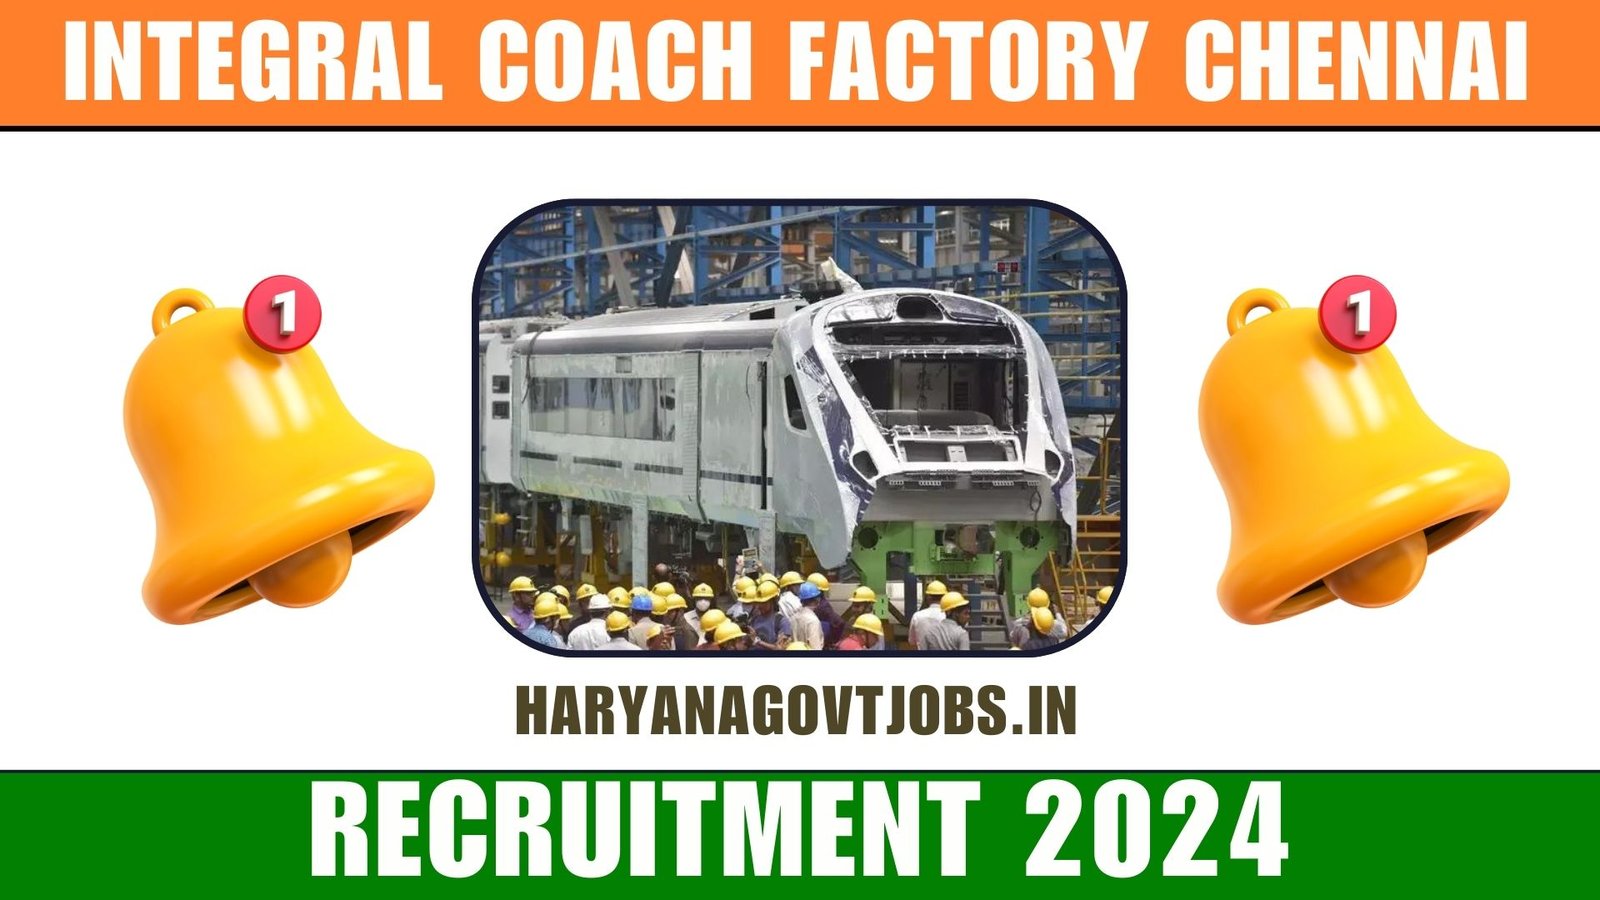 Integral Coach Factory Chennai Recruitment 2024 Short Information